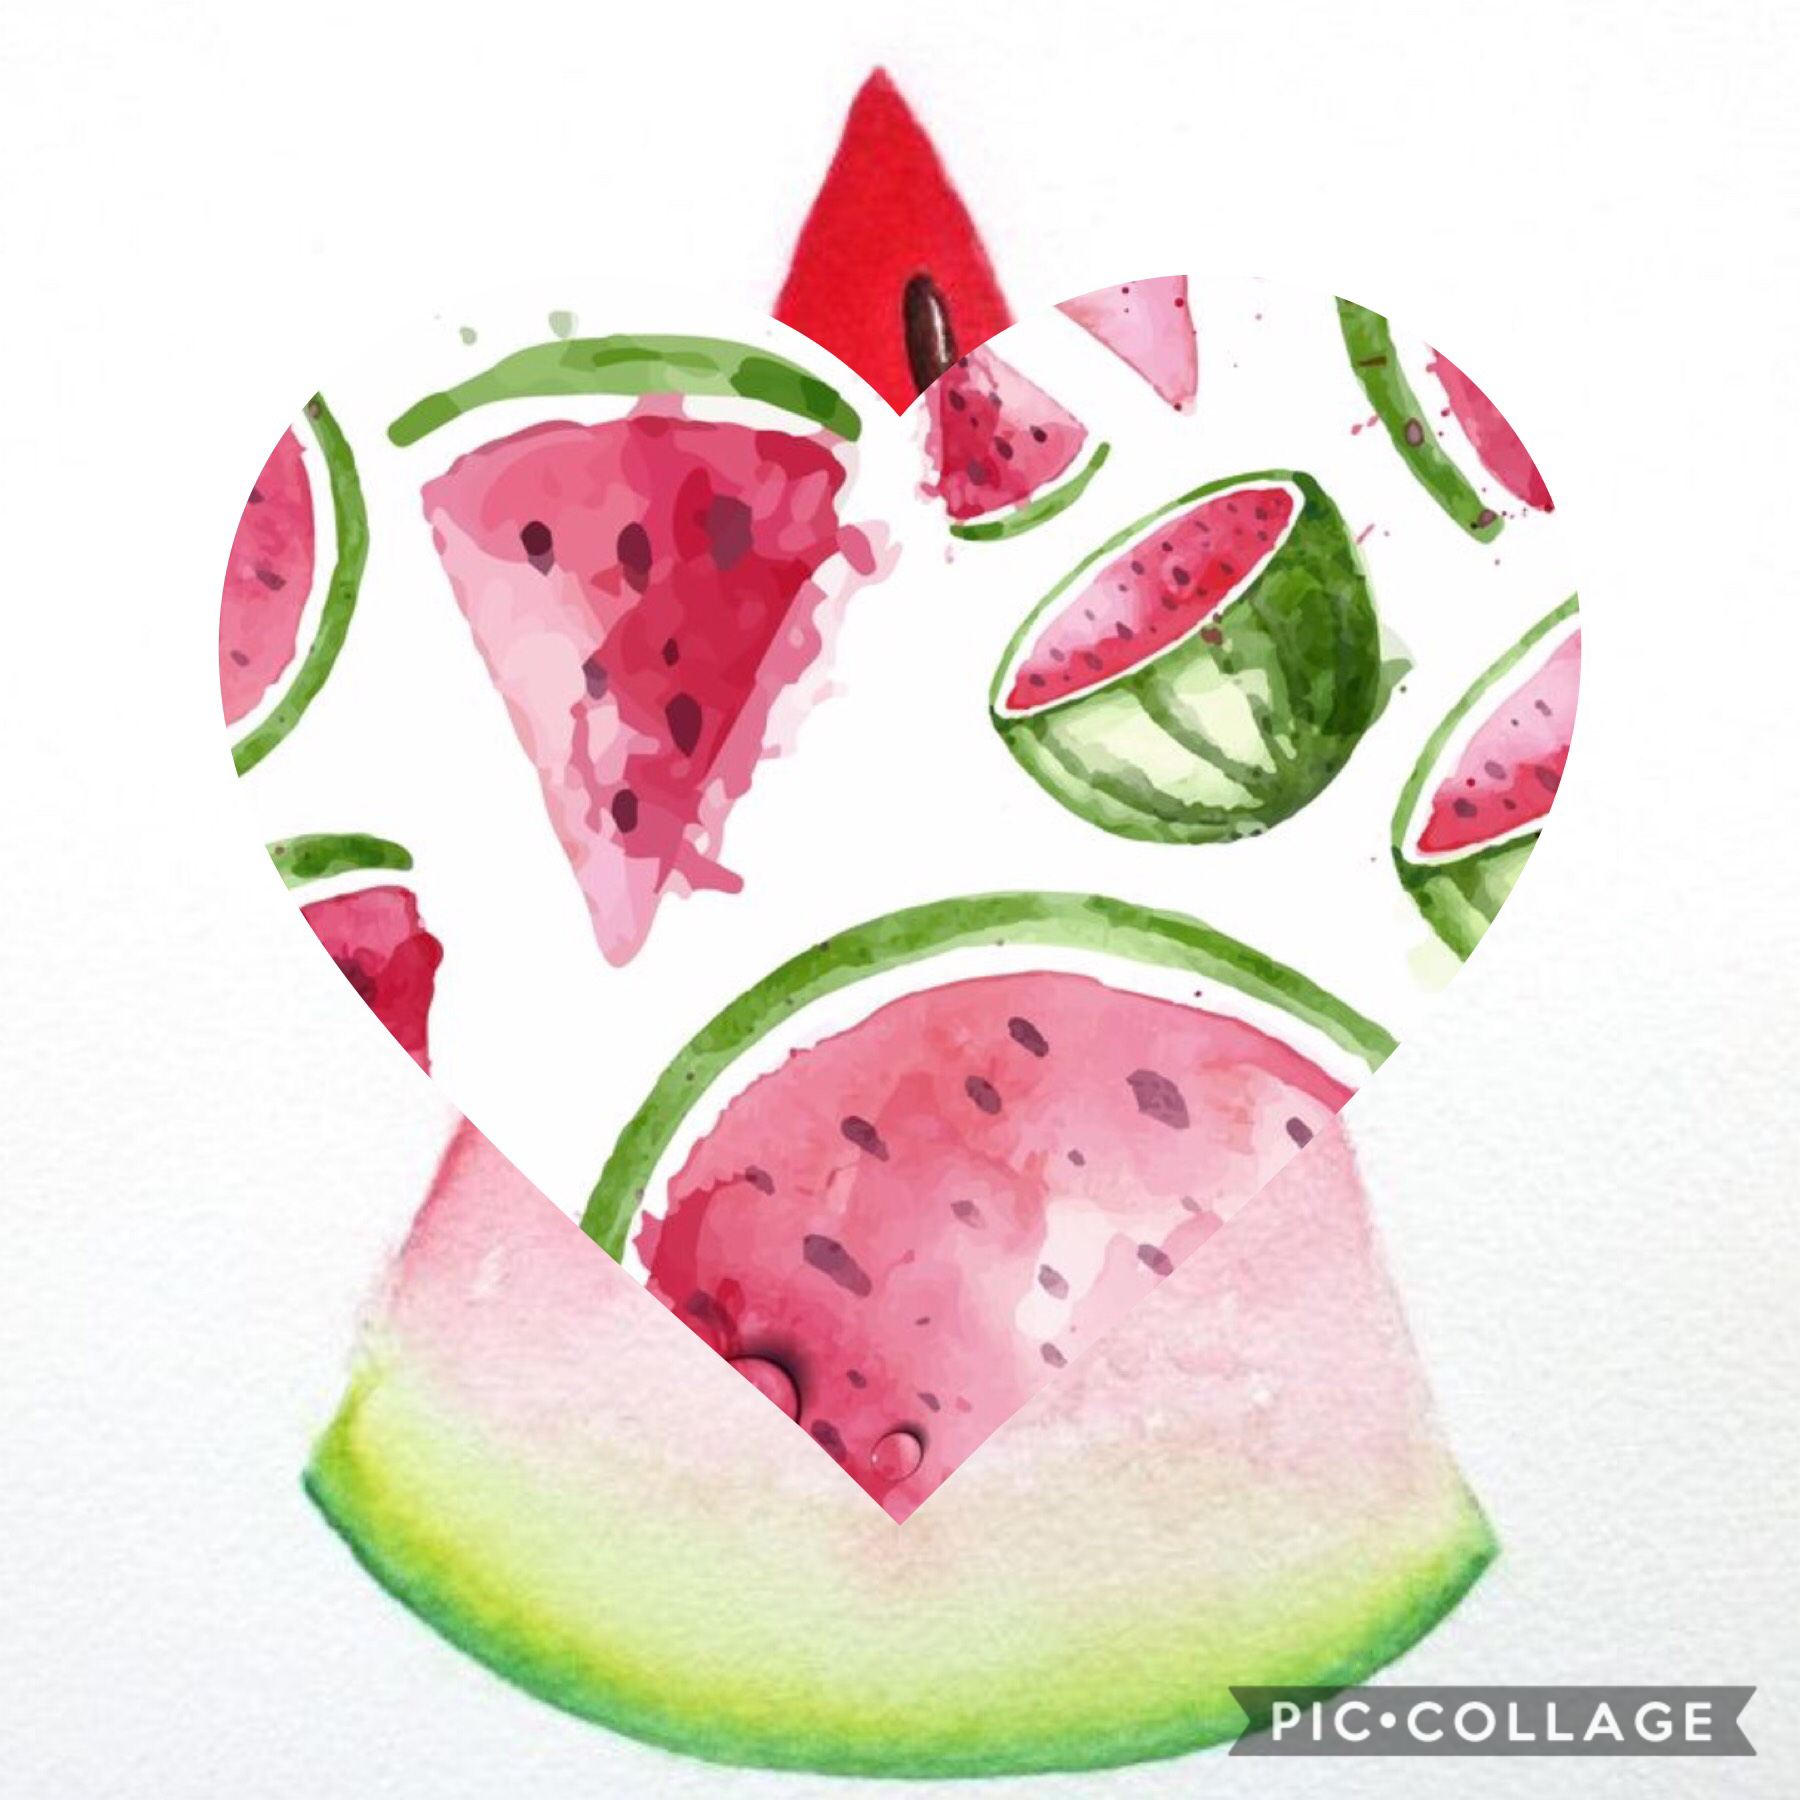 Watermelon


Please do not copy